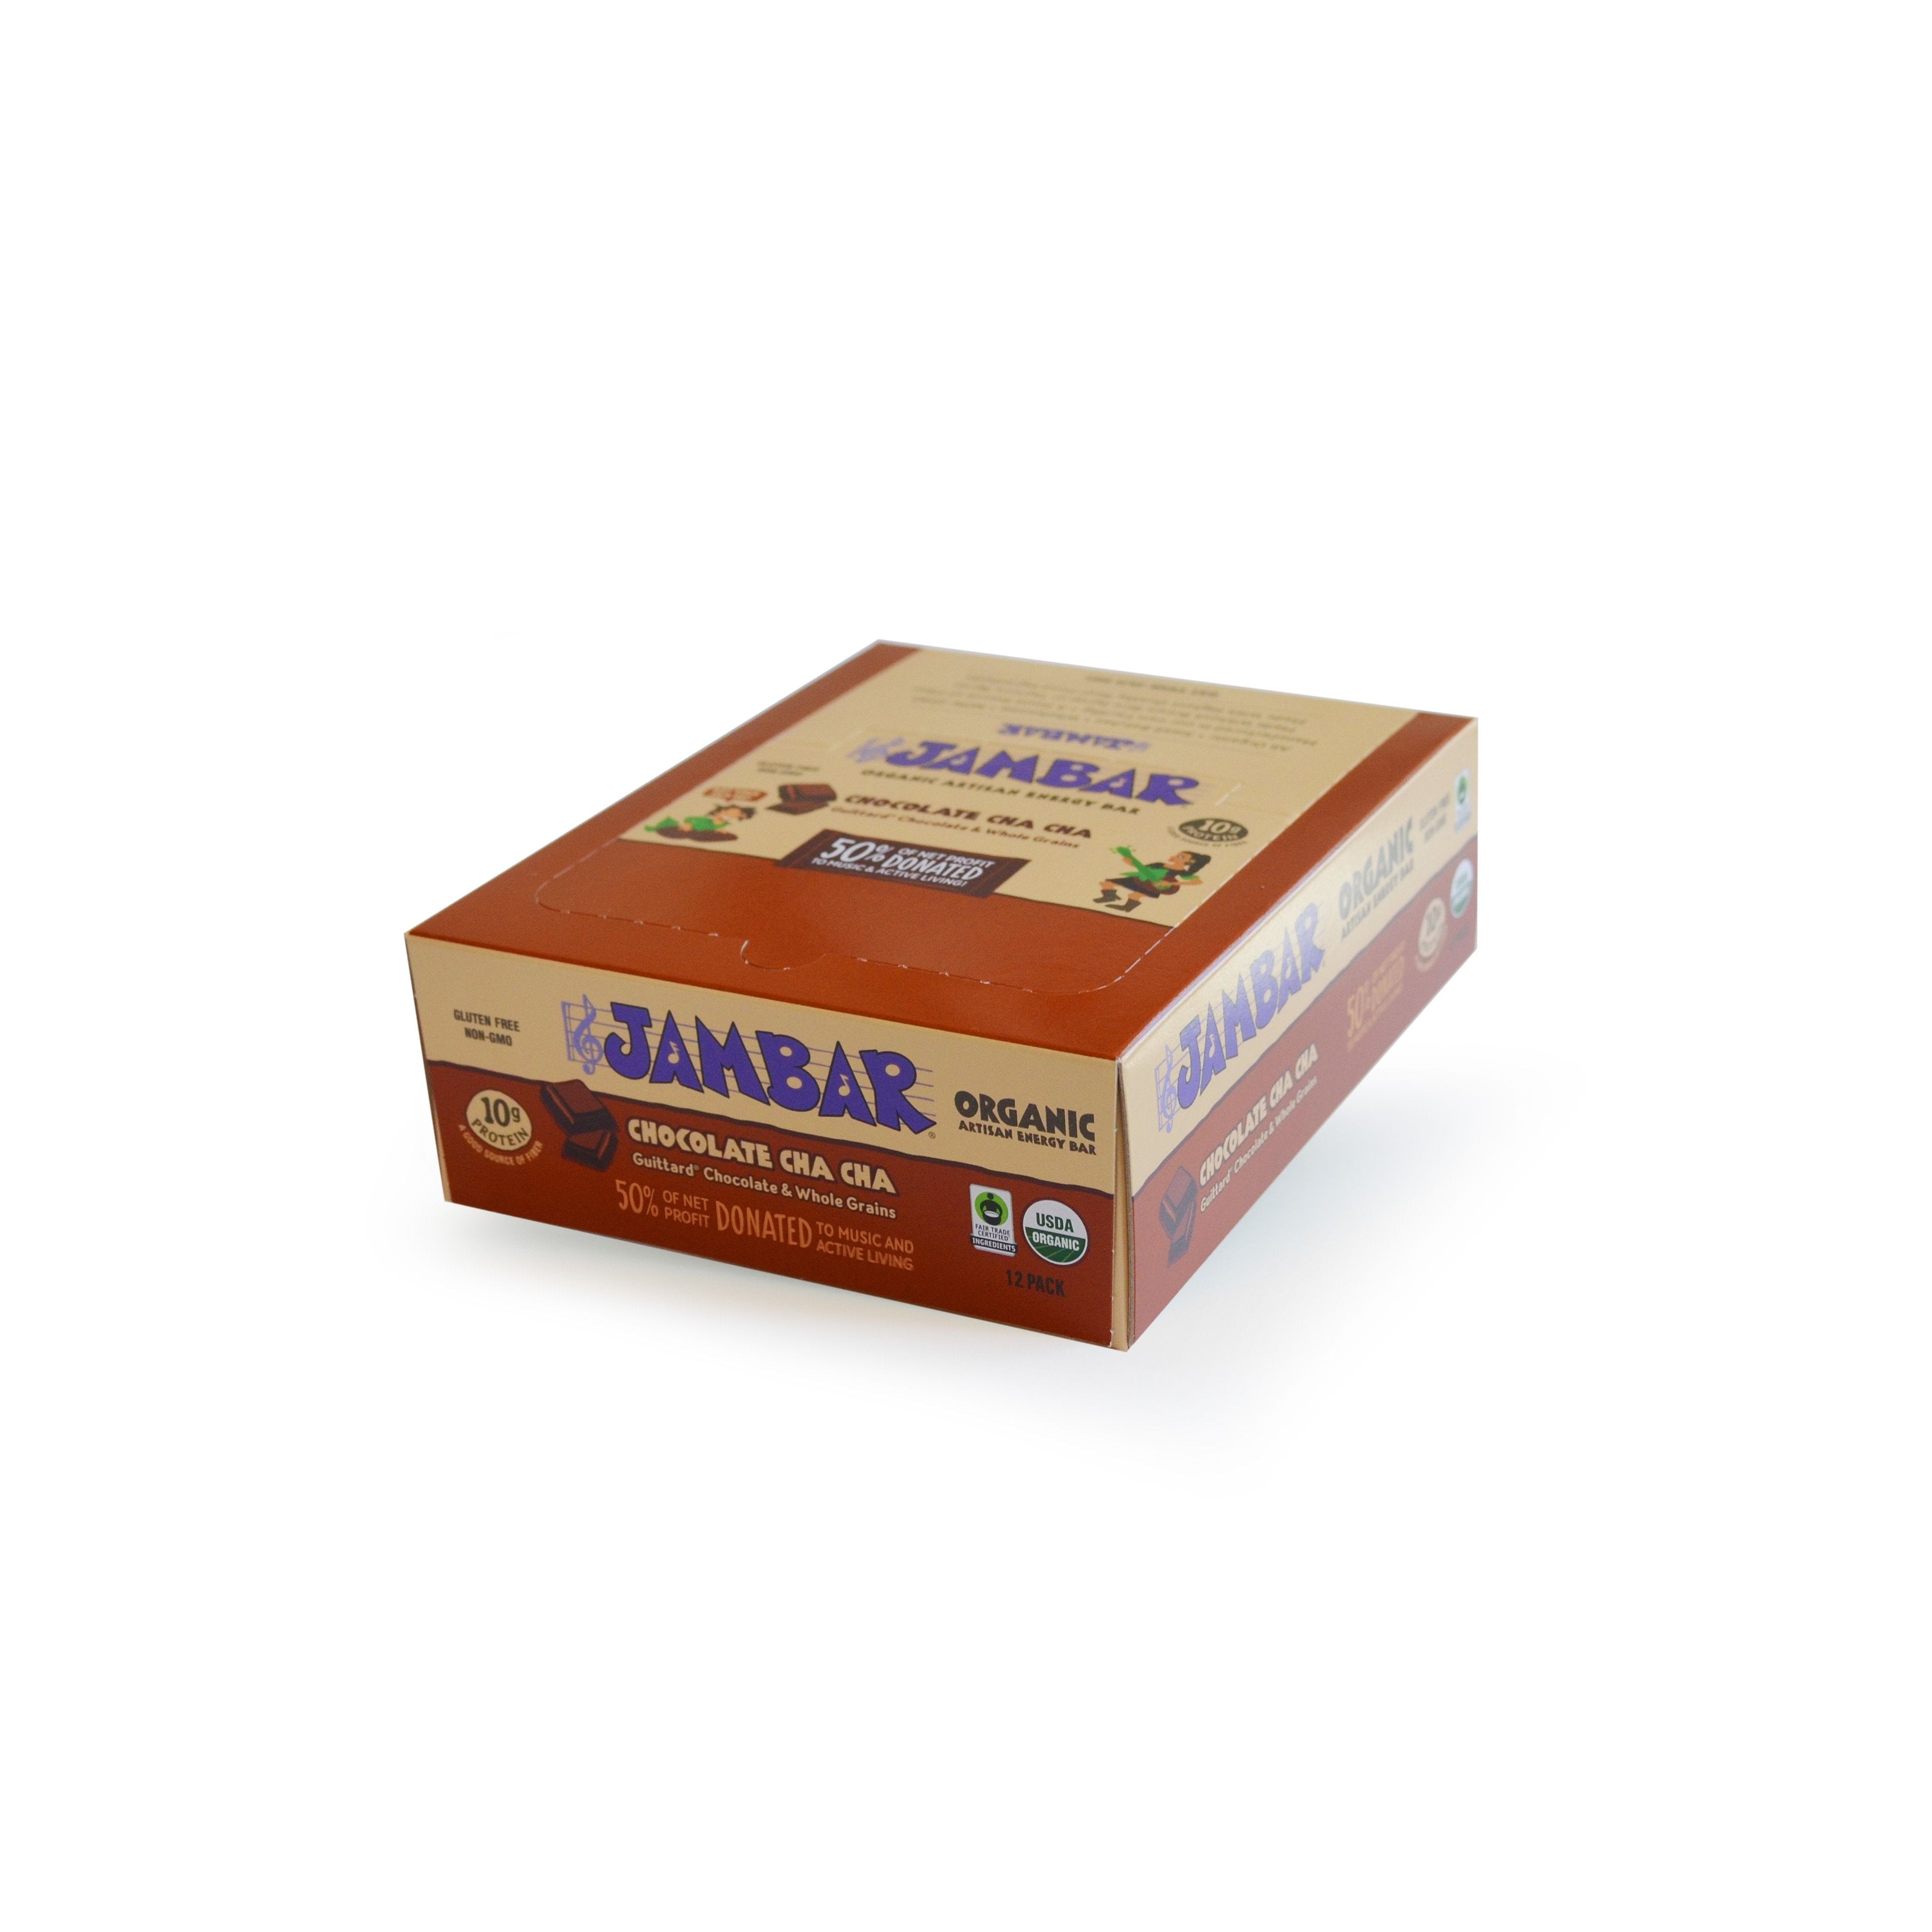 www.jambar.com/products/12-box-case-chocolate-cha-cha